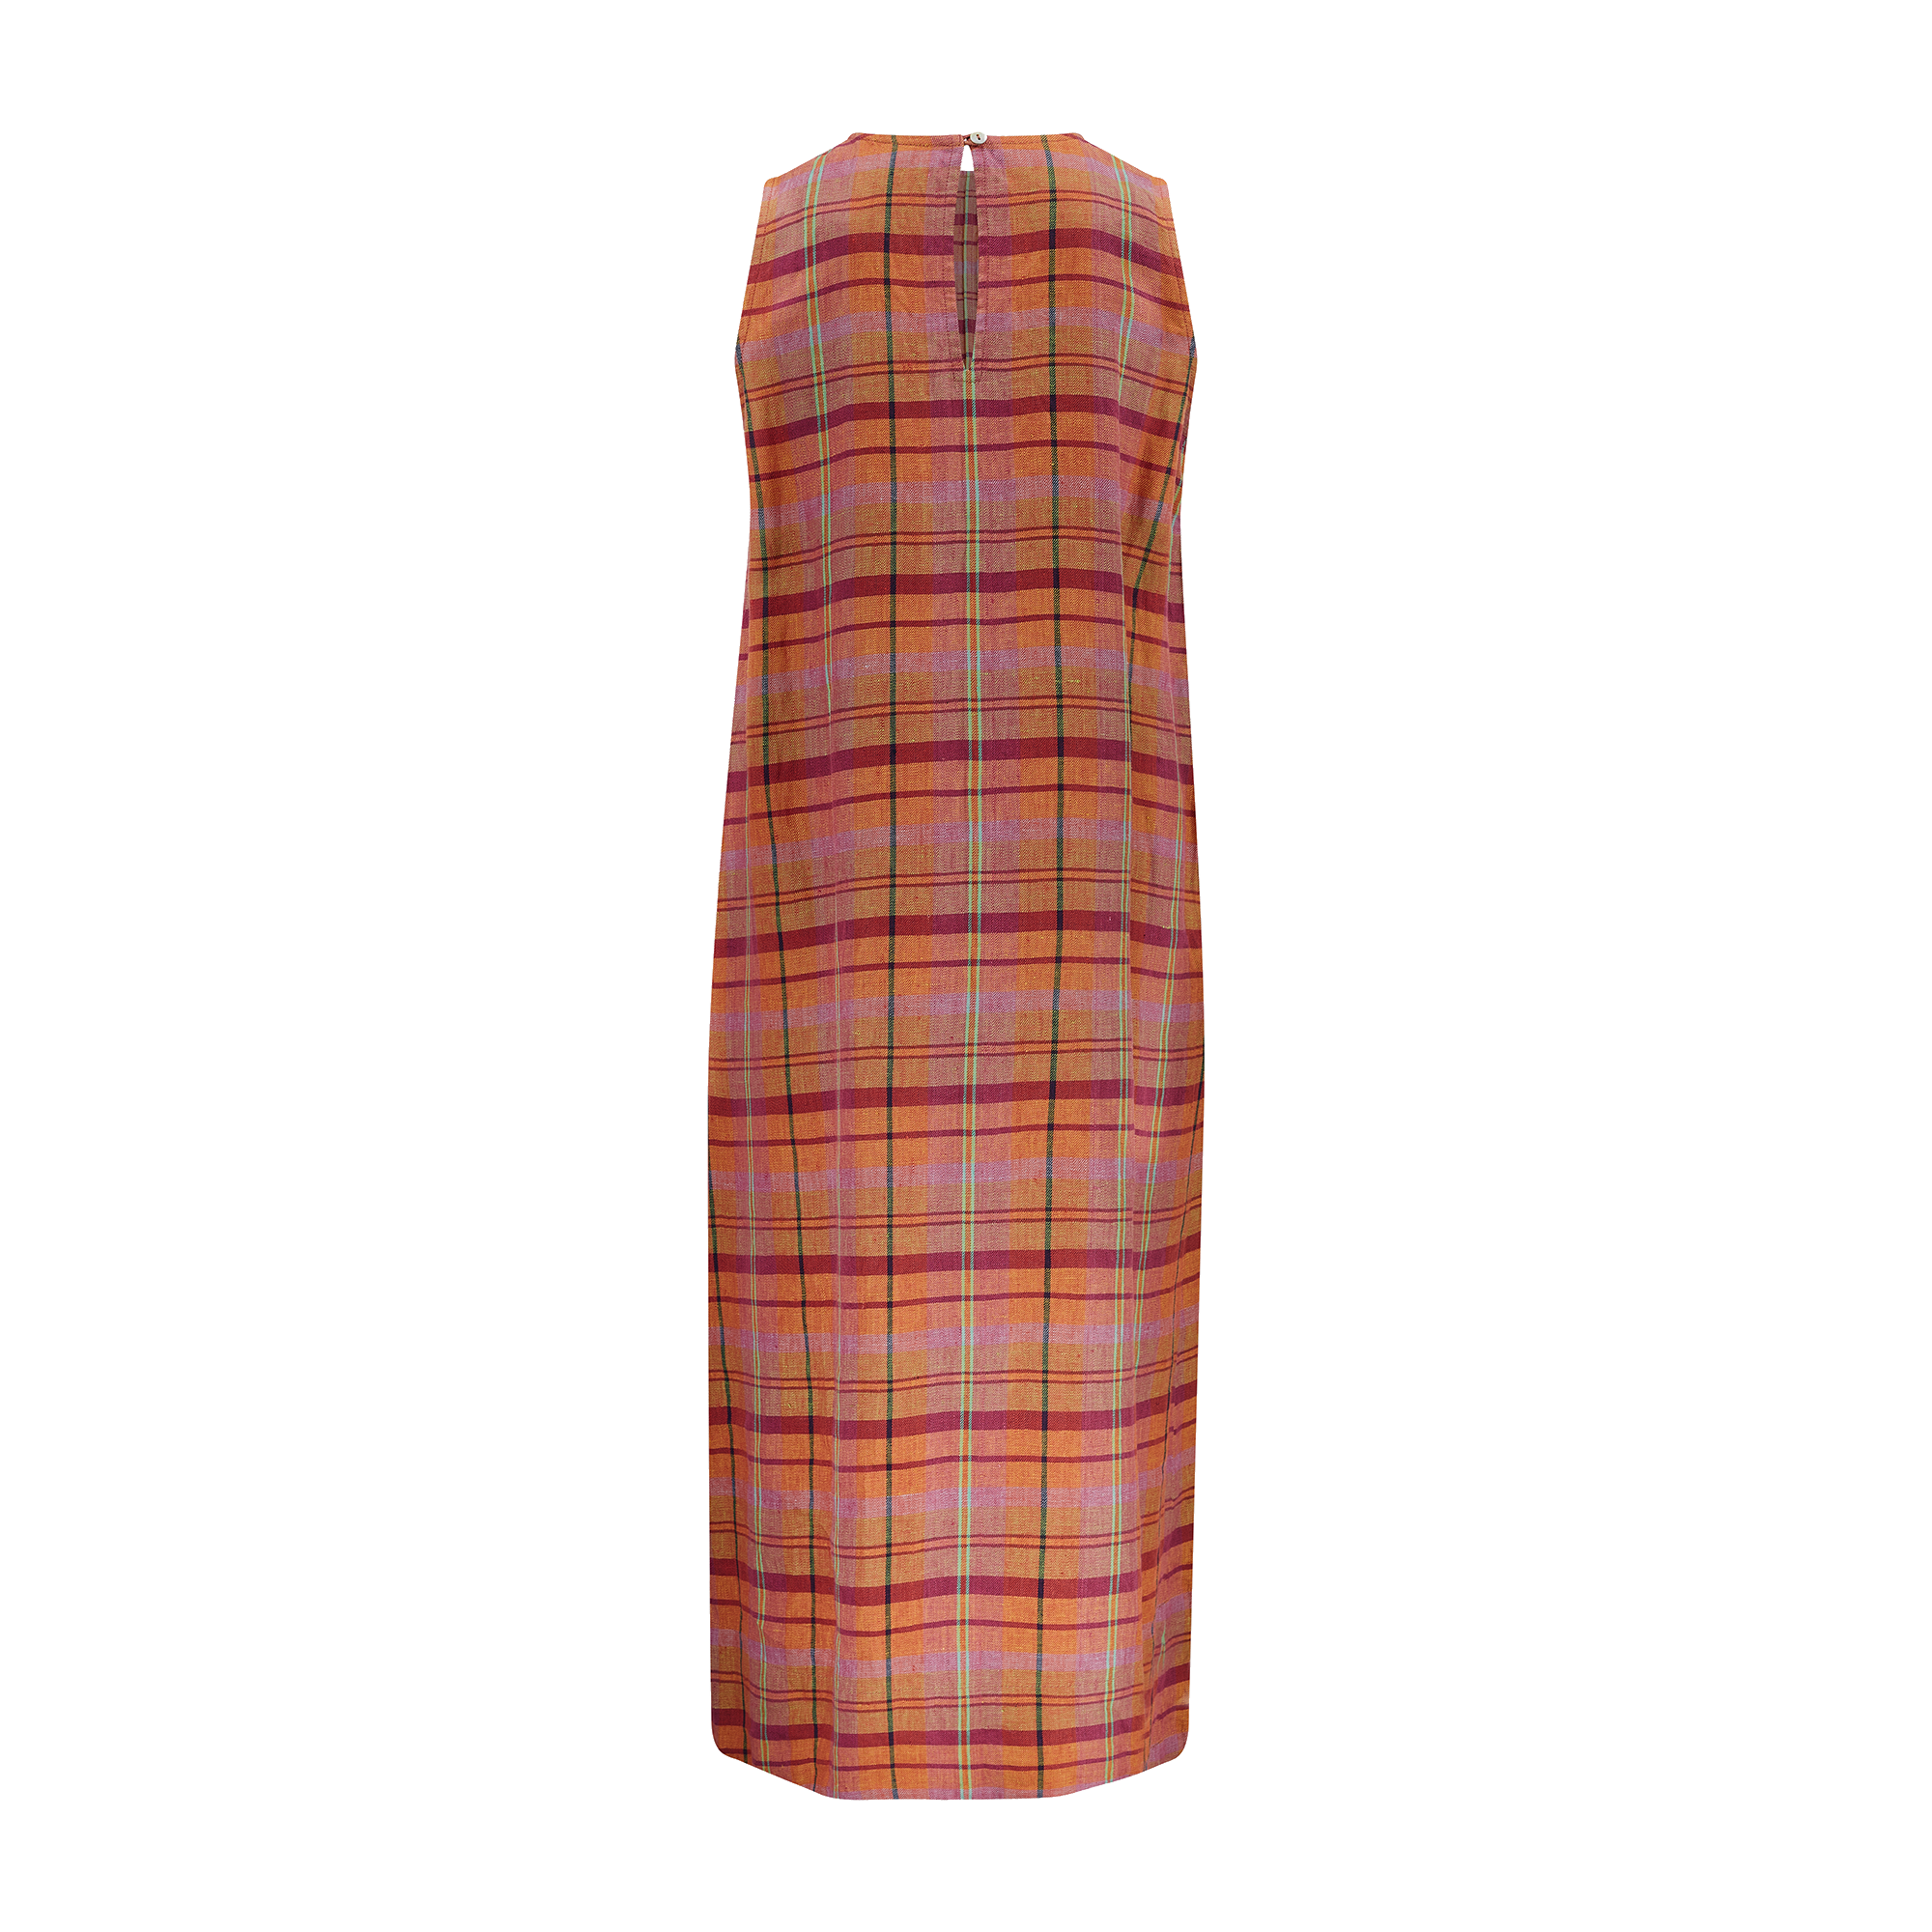 The Sleeveless Pintuck Dress - Cinnamon Check Linen